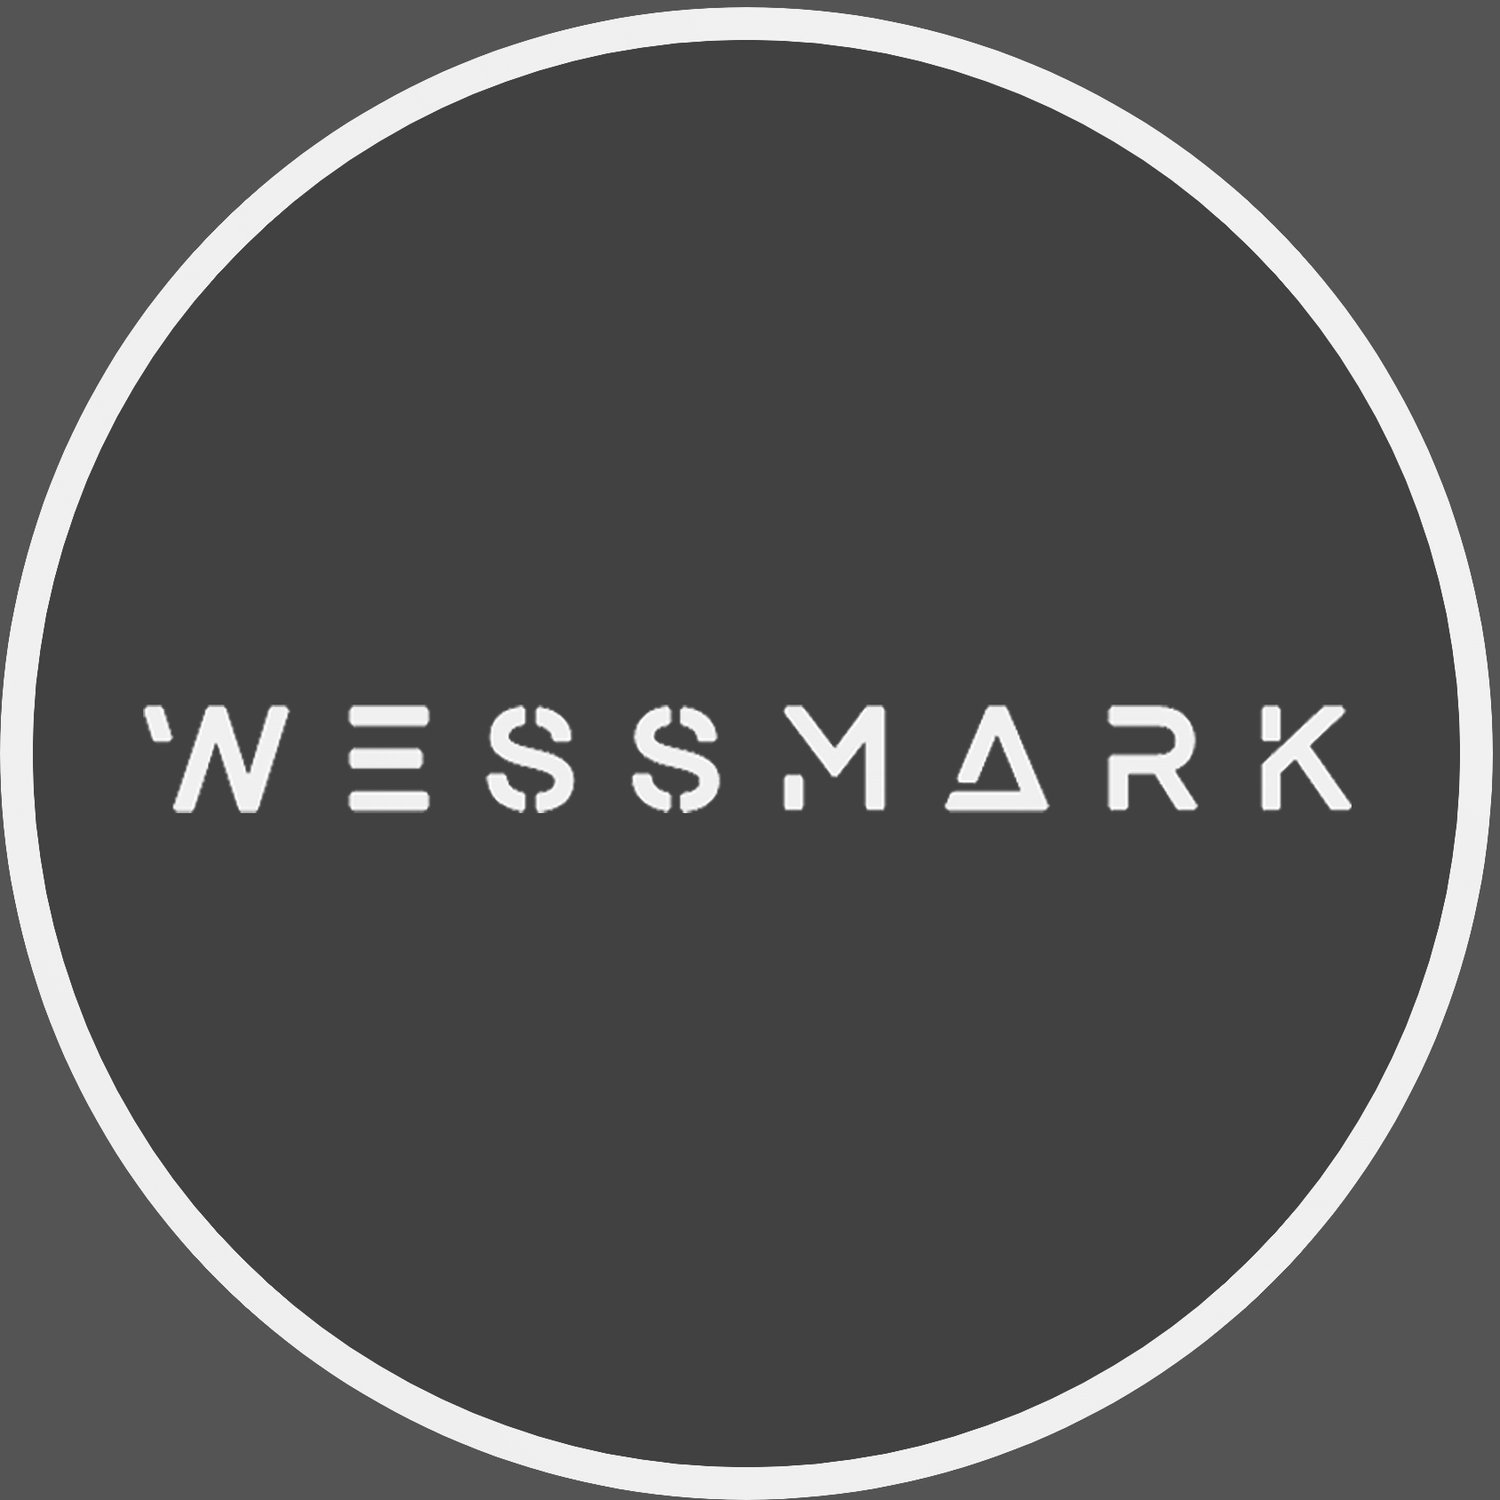 Wessmark